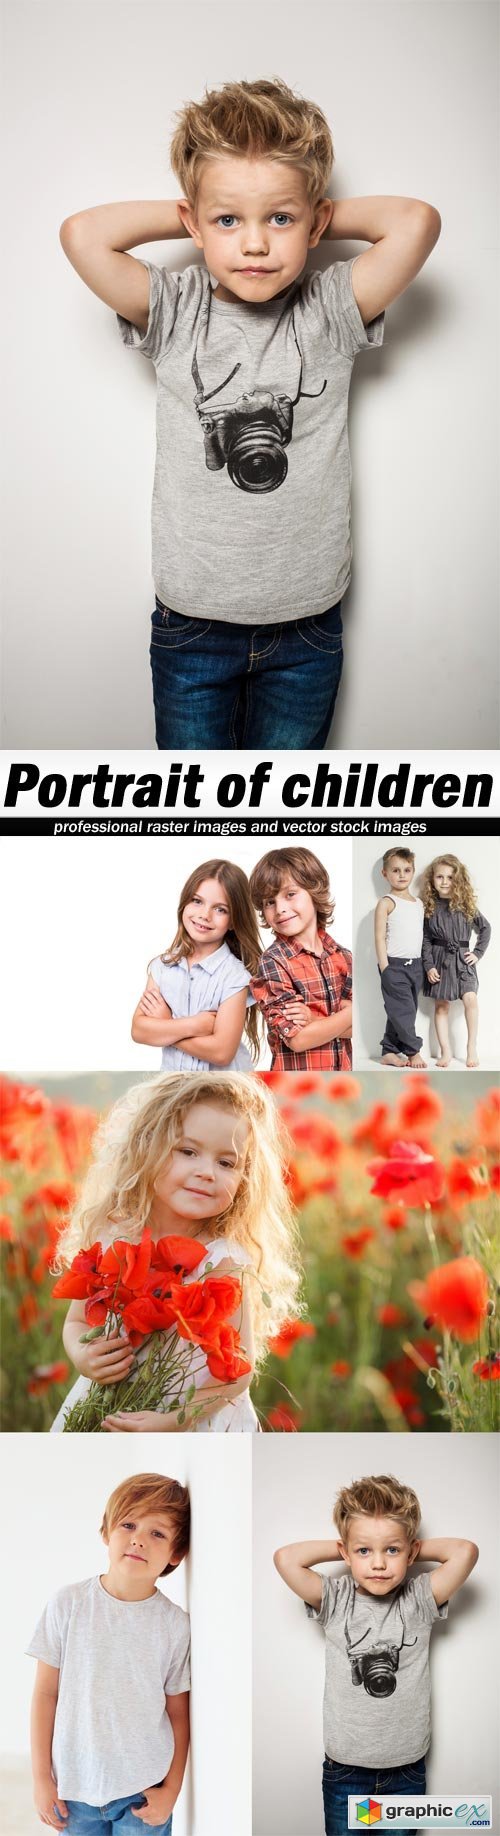 Portrait of children - 5 UHQ JPEG